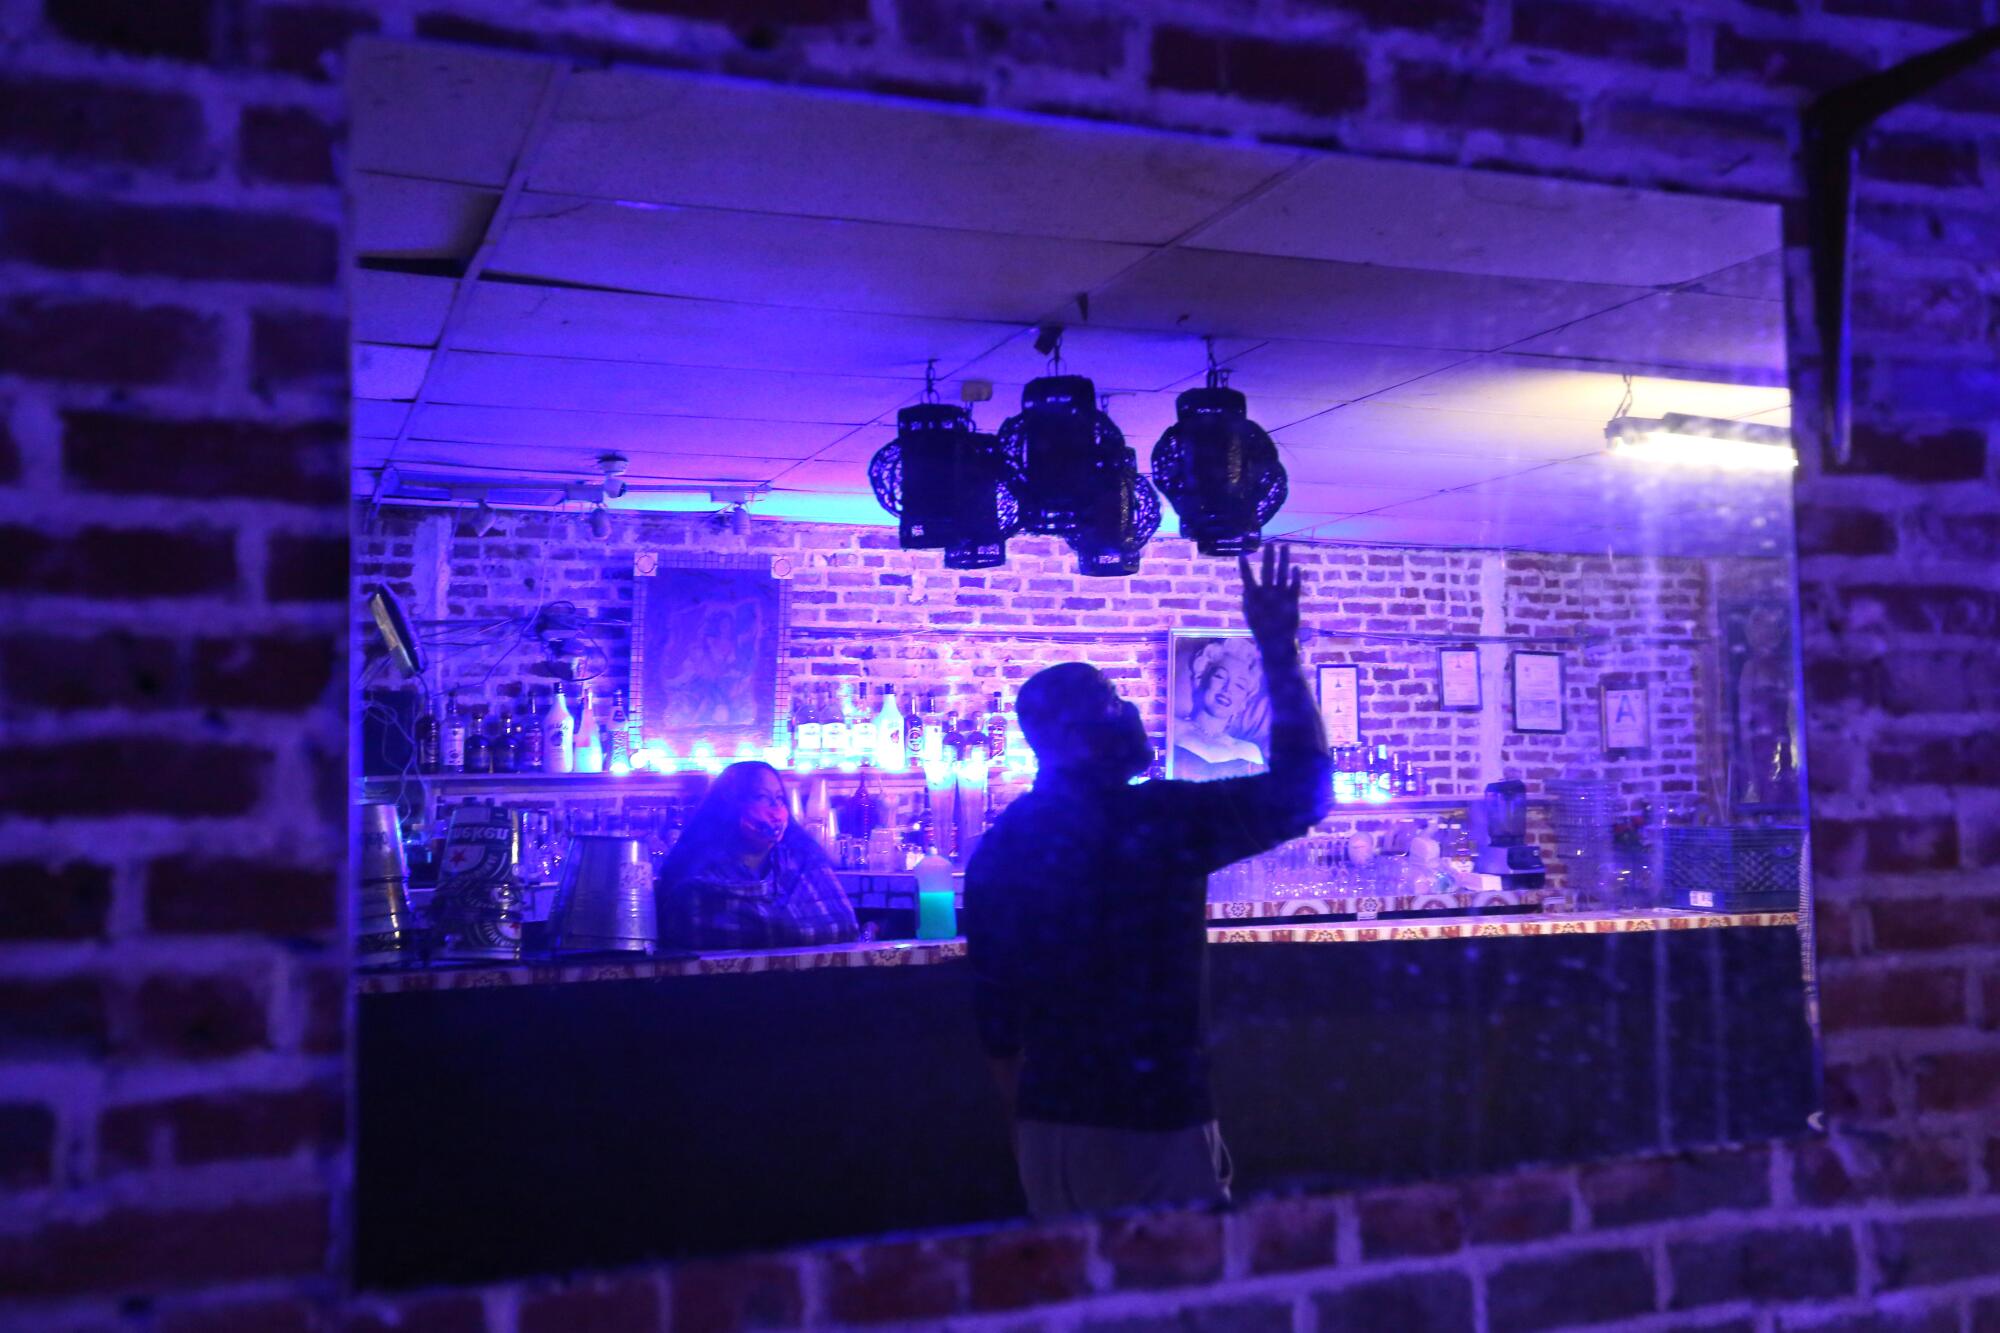 Sergio Hernandez checks a light inside the bar.